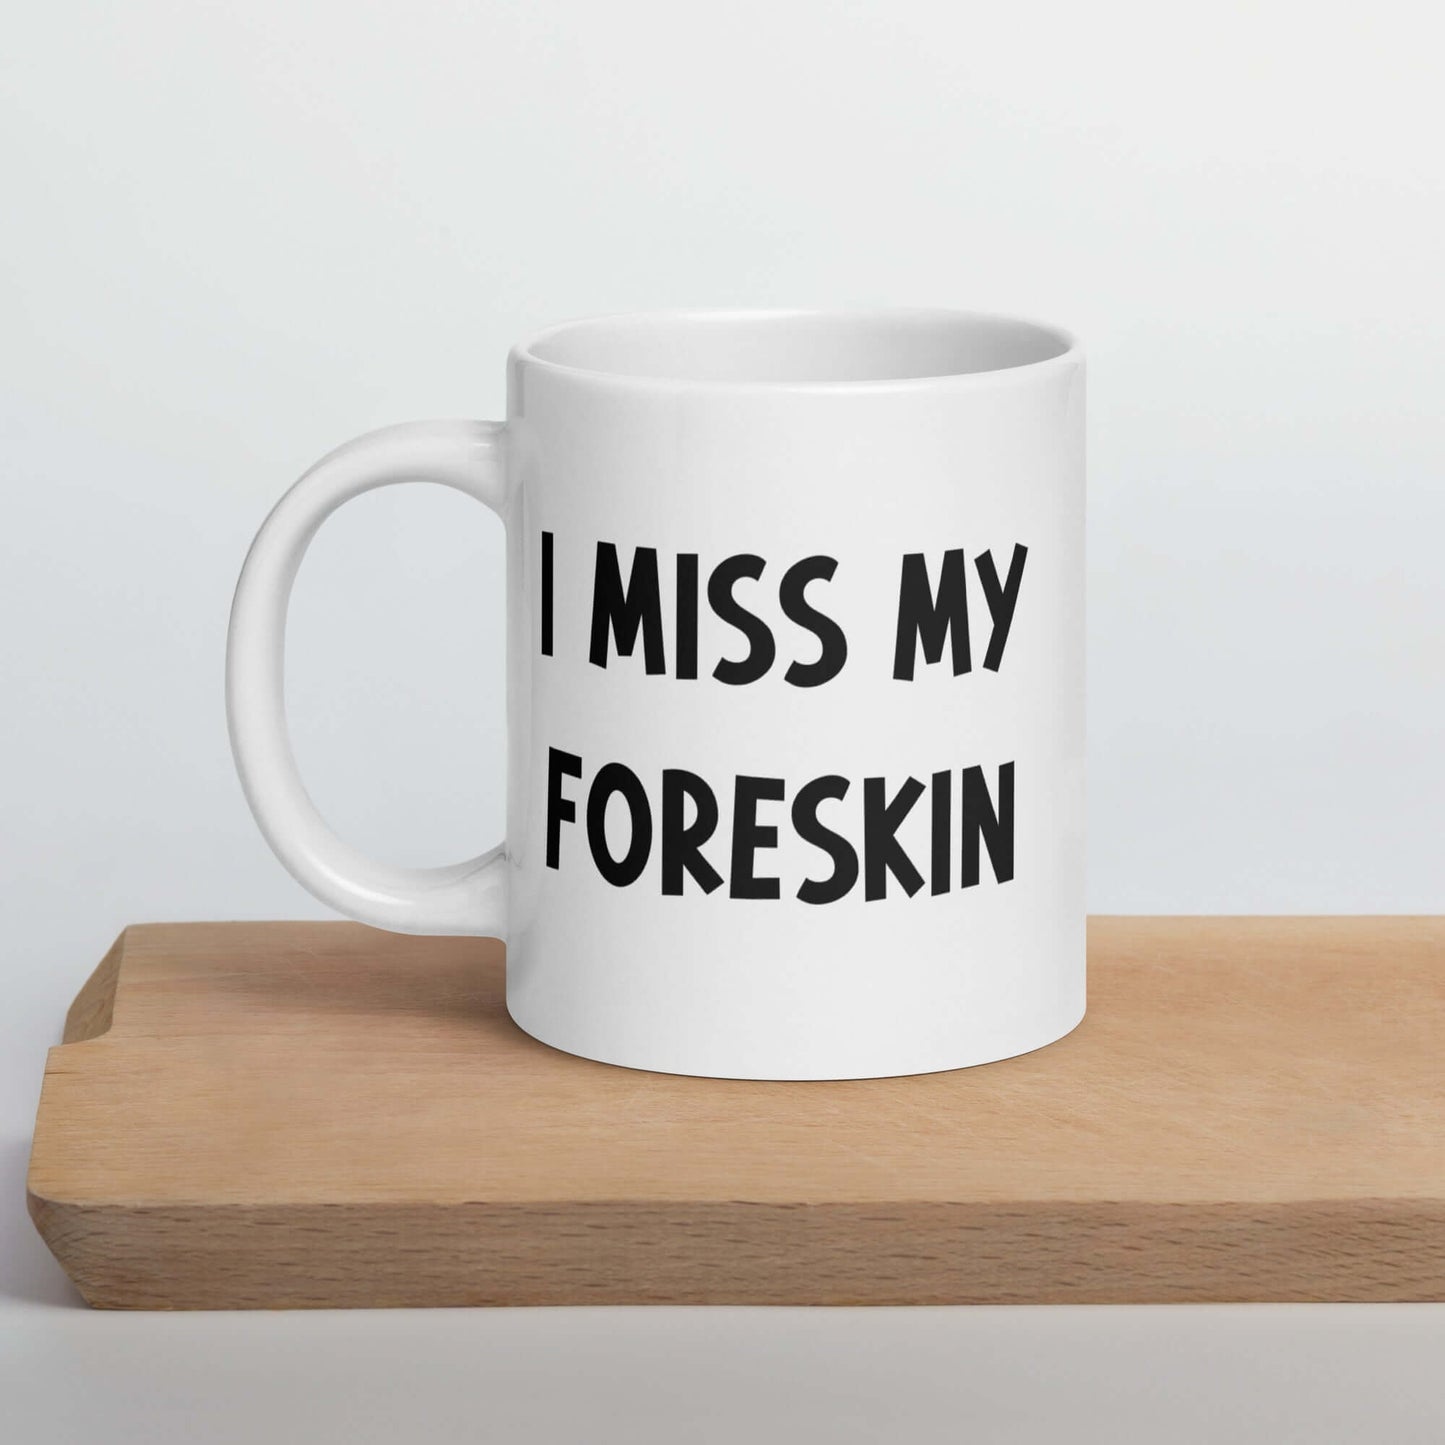 I miss my foreskin ceramic coffee mug